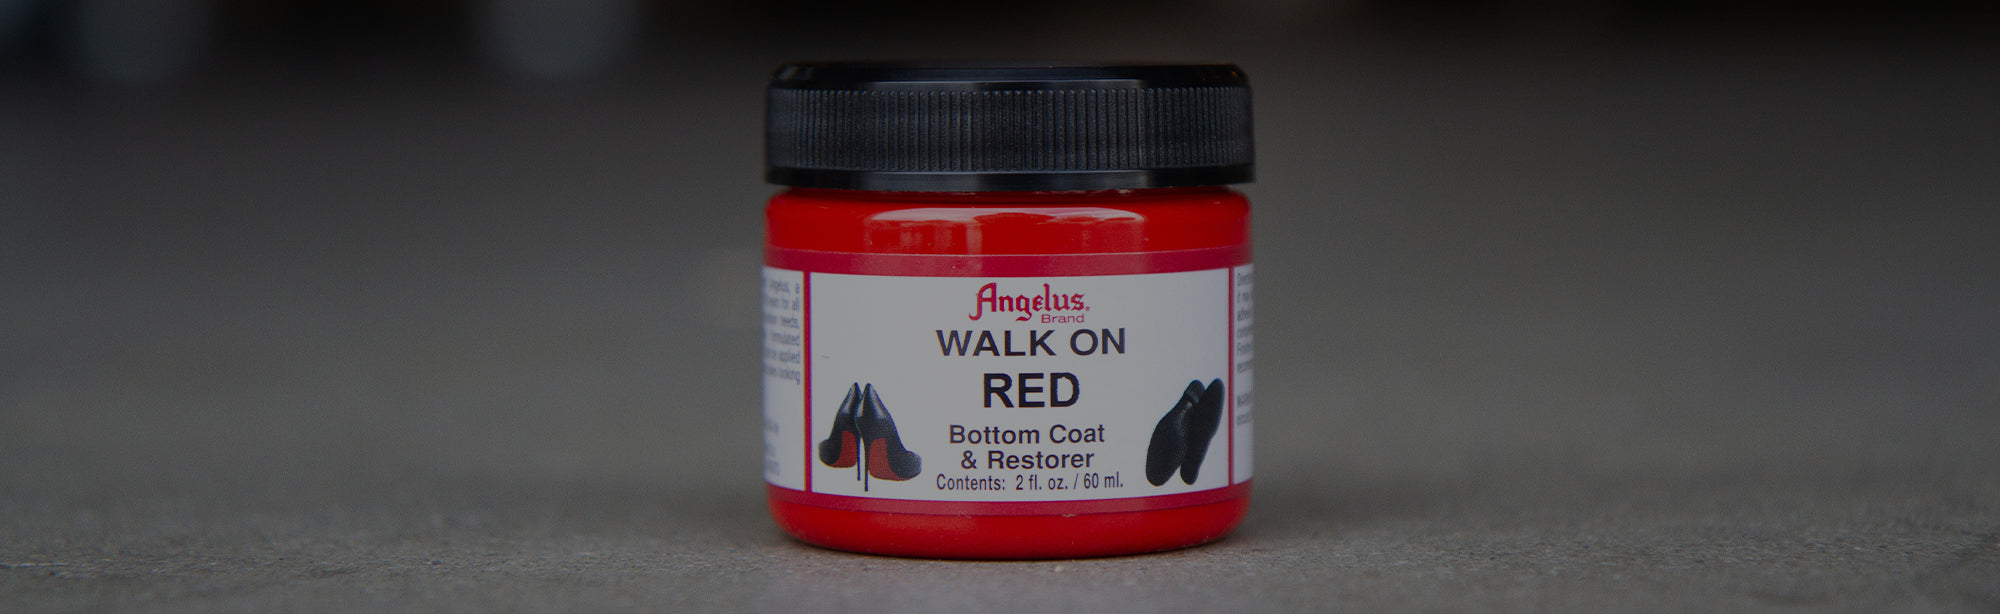 Walk On Red Bottom Coat & Restorer Angelus Brand Acrylic Leather Paint